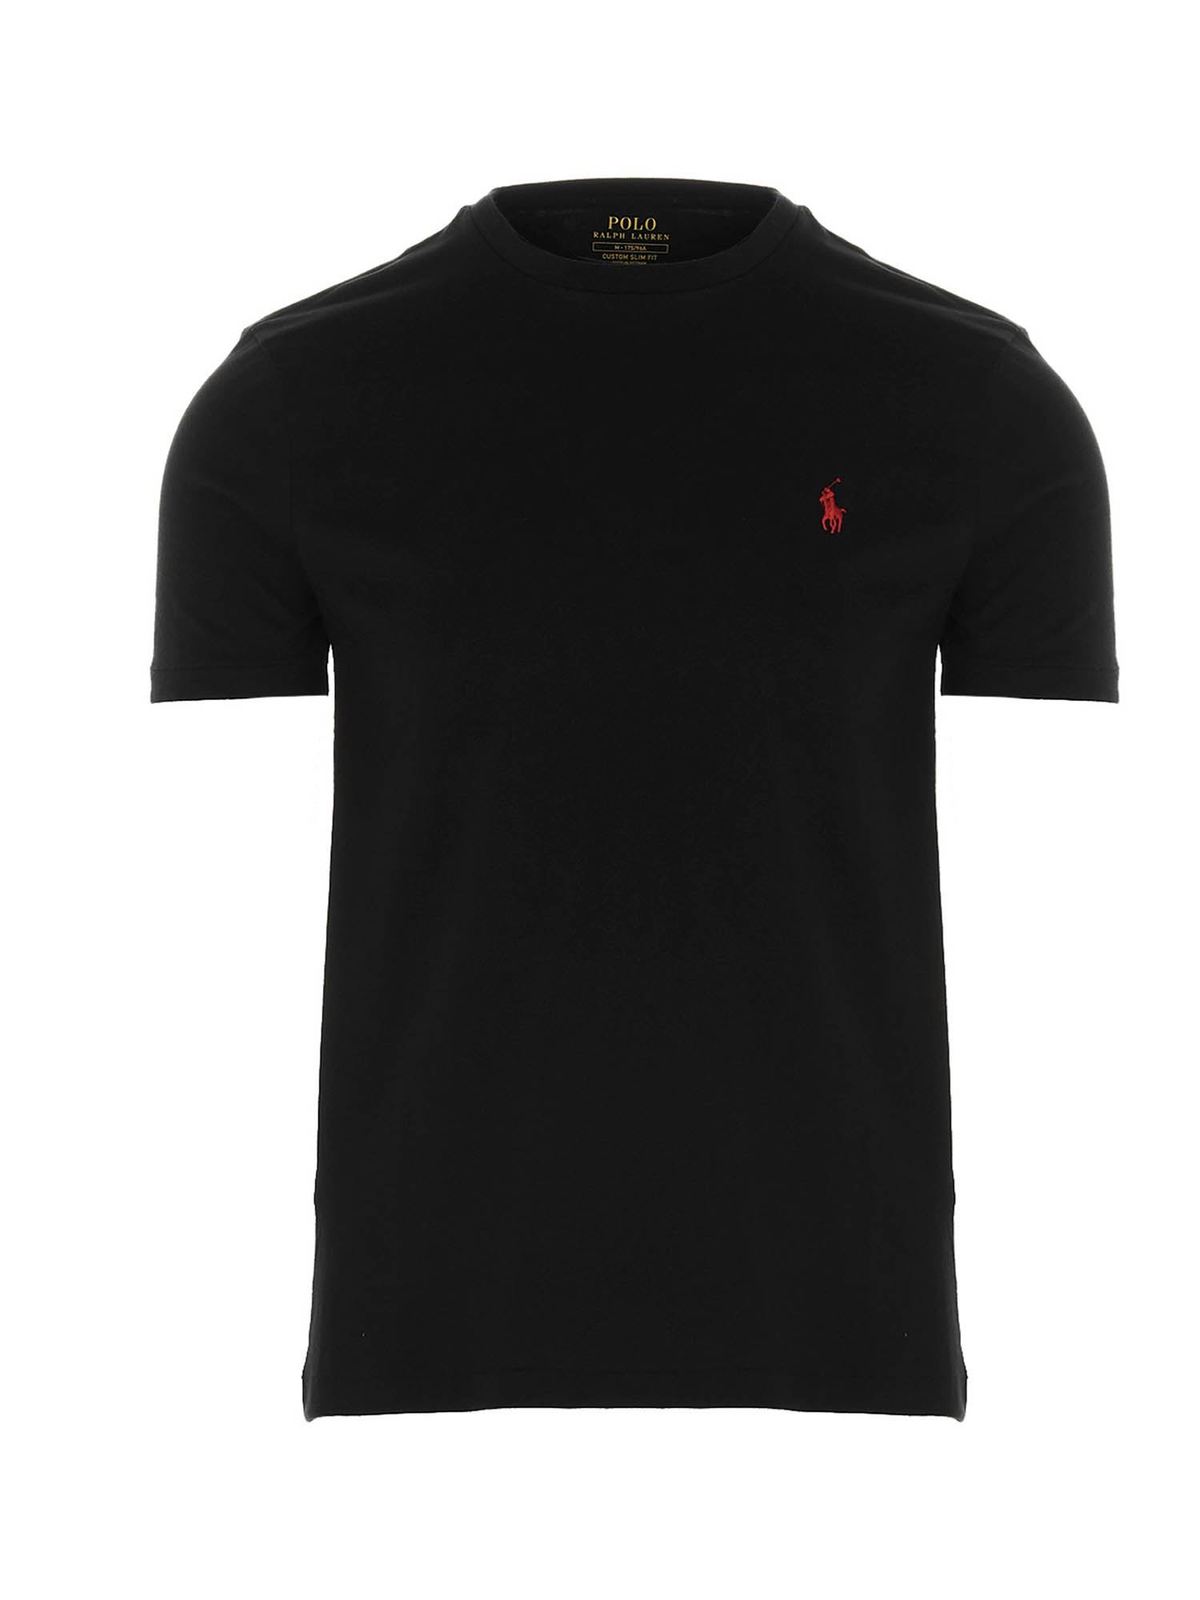 Ralph Lauren - logo t-shirt in black - 680785001